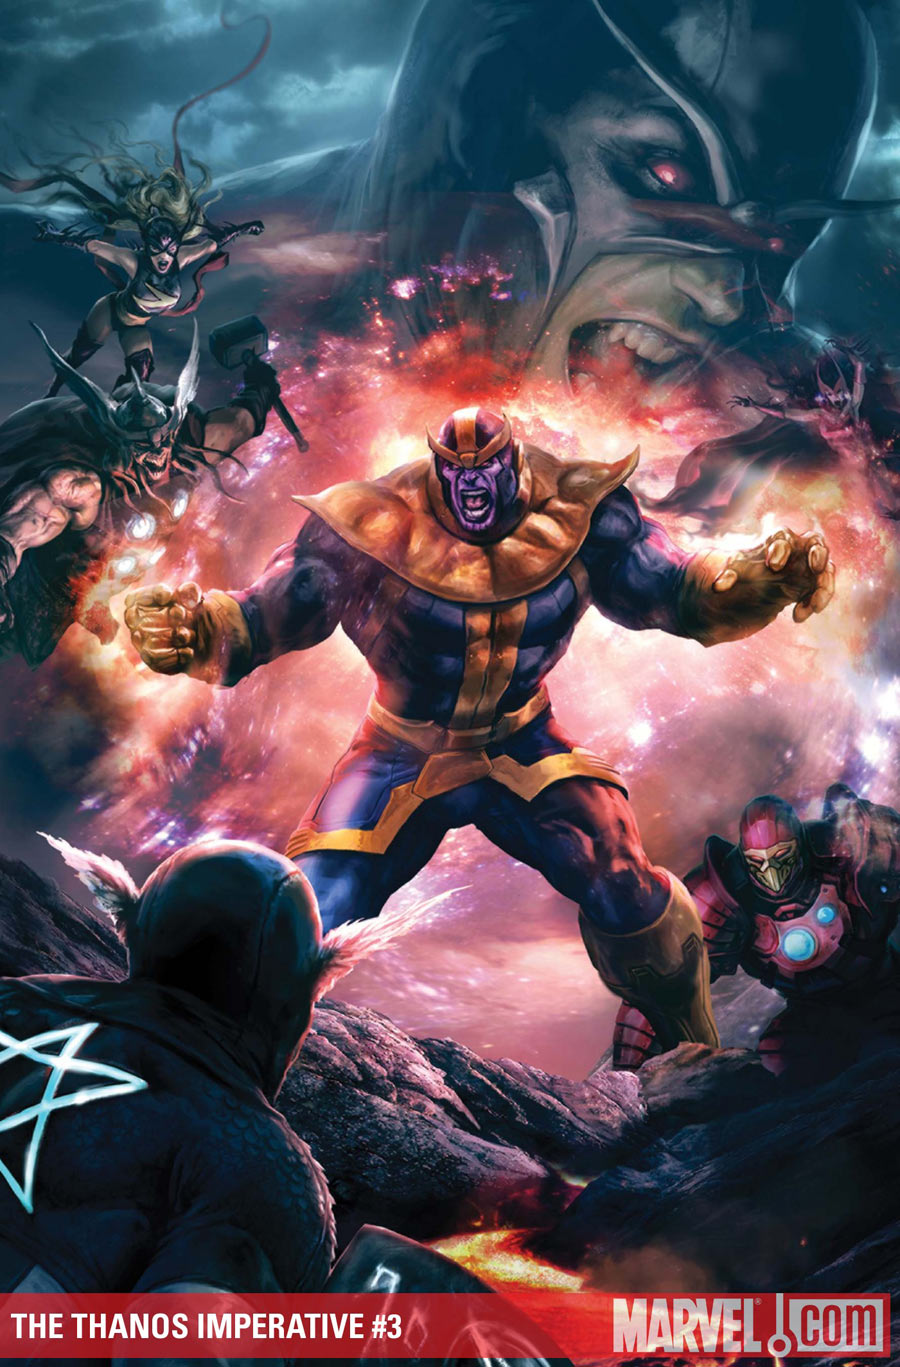 The Thanos Imperative #3